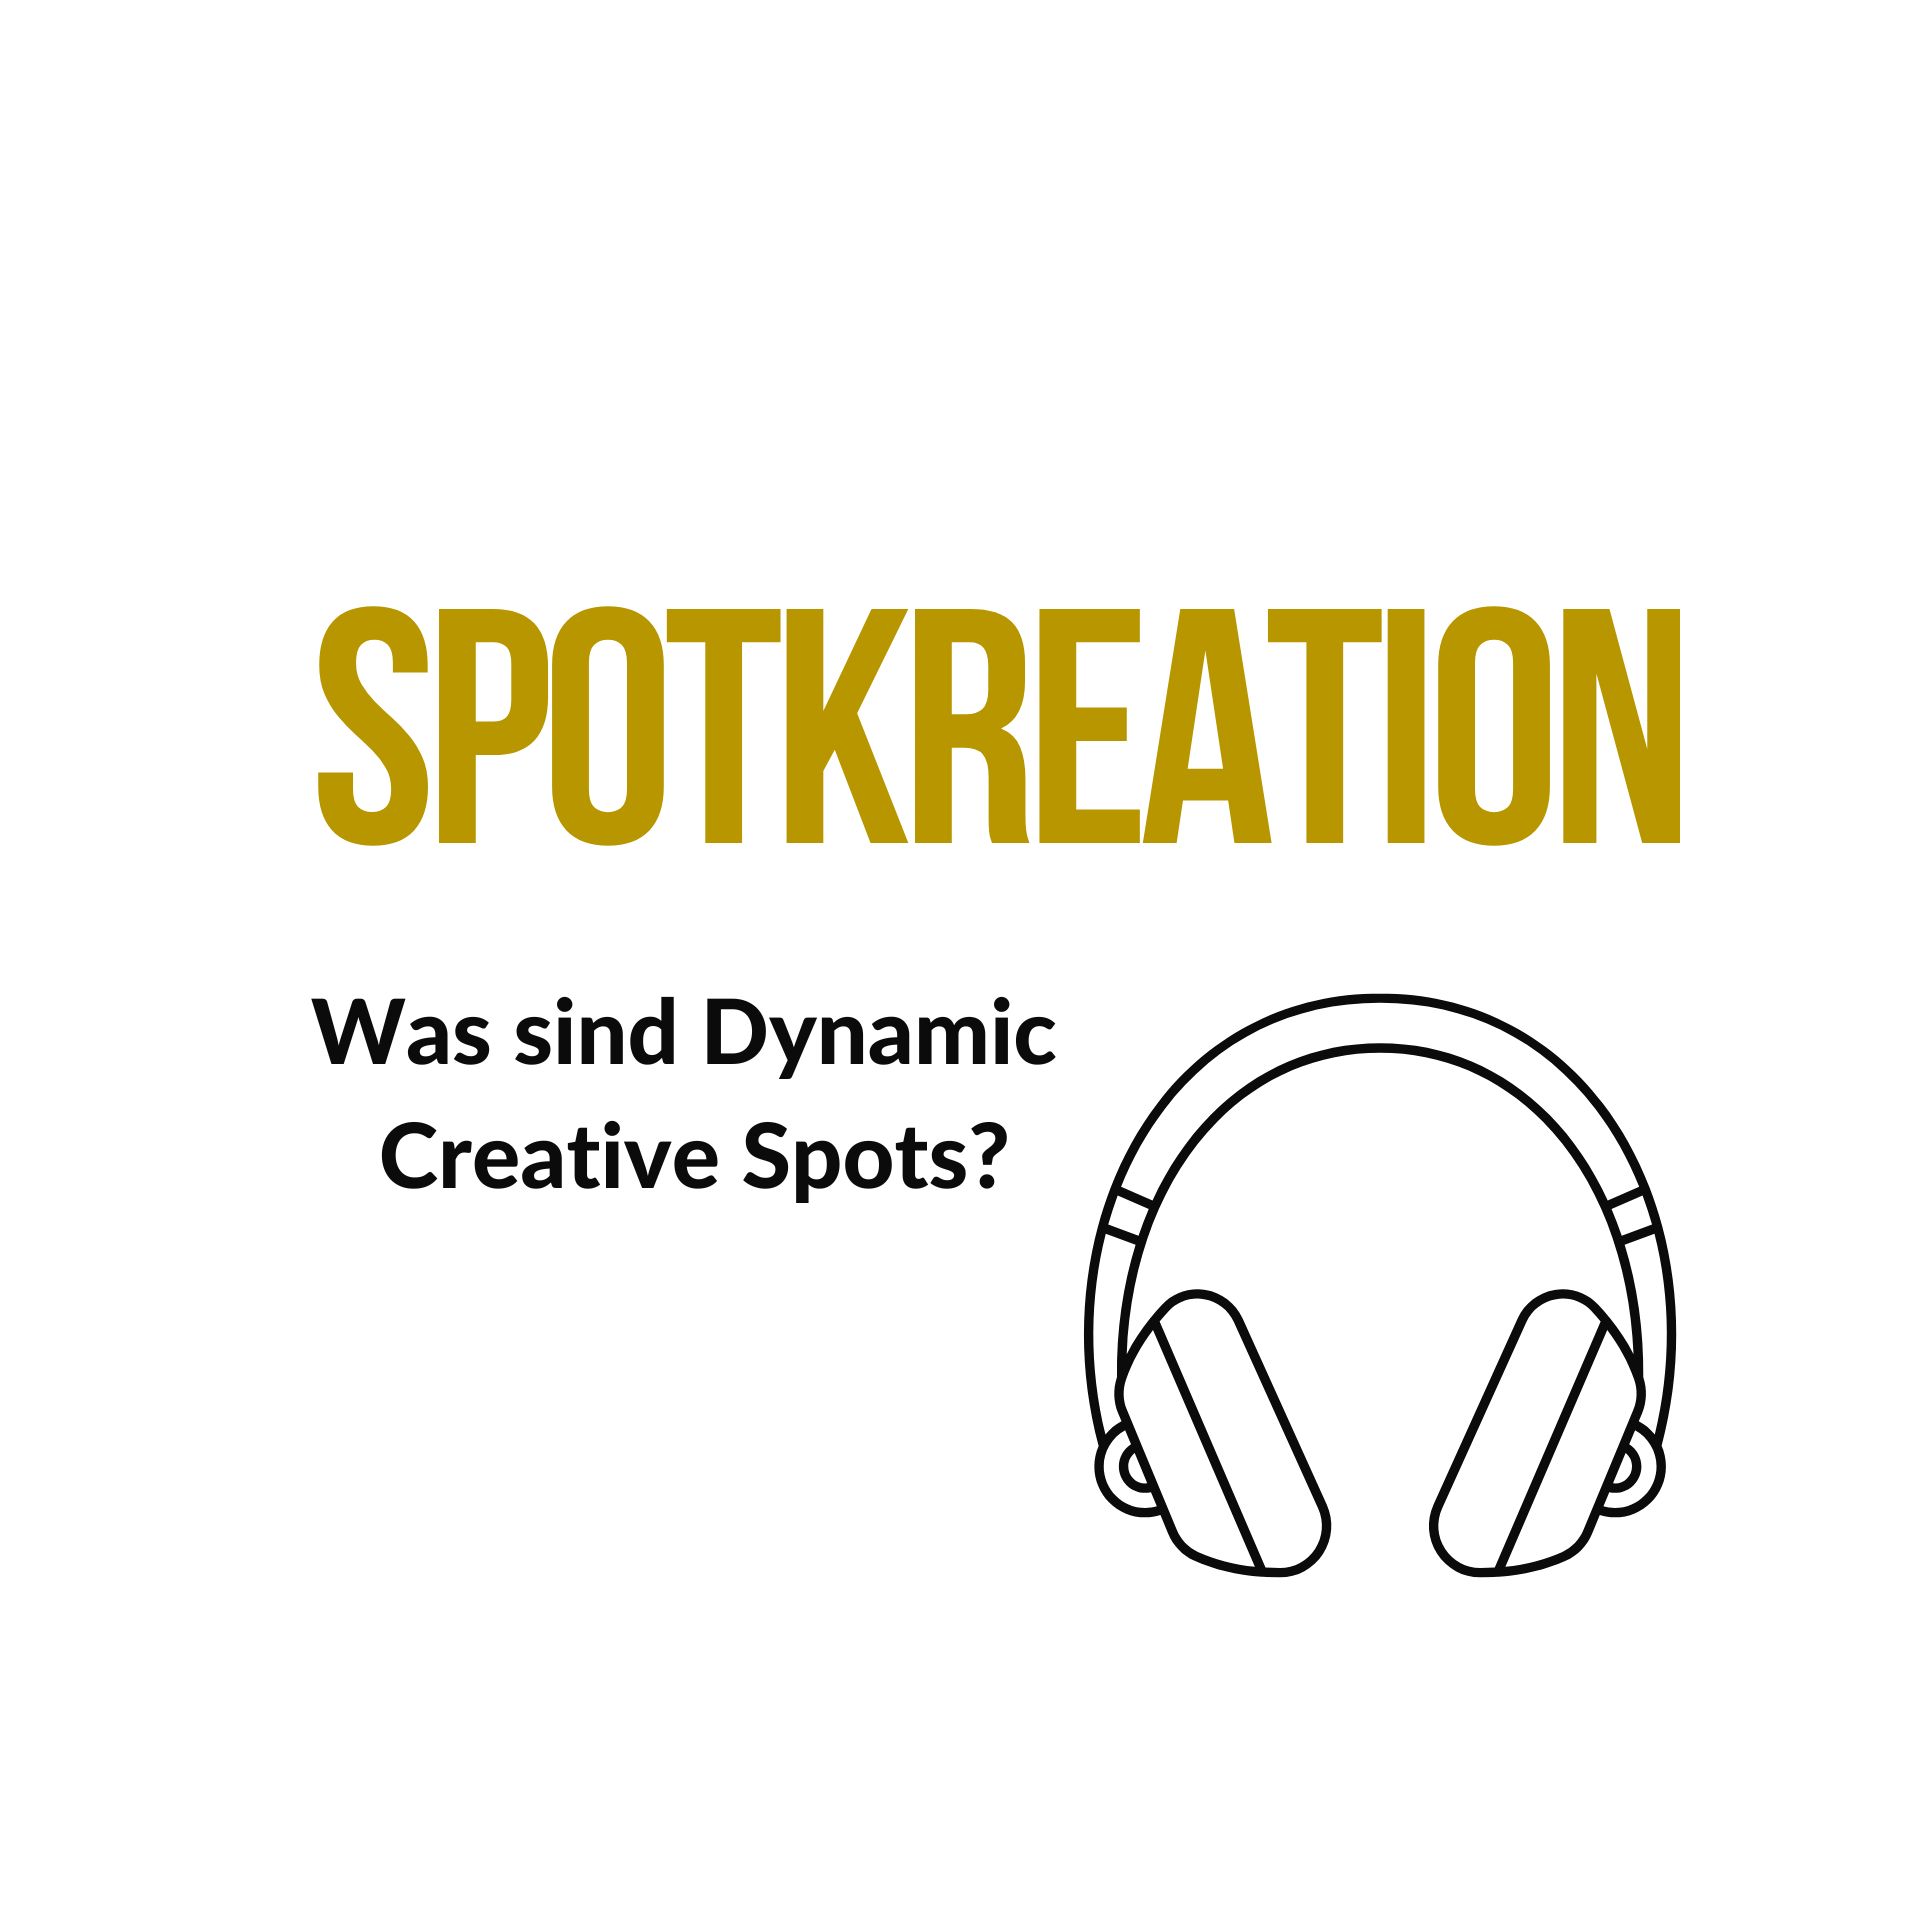 Spotkreation Was sind Dynamic Creative Spots